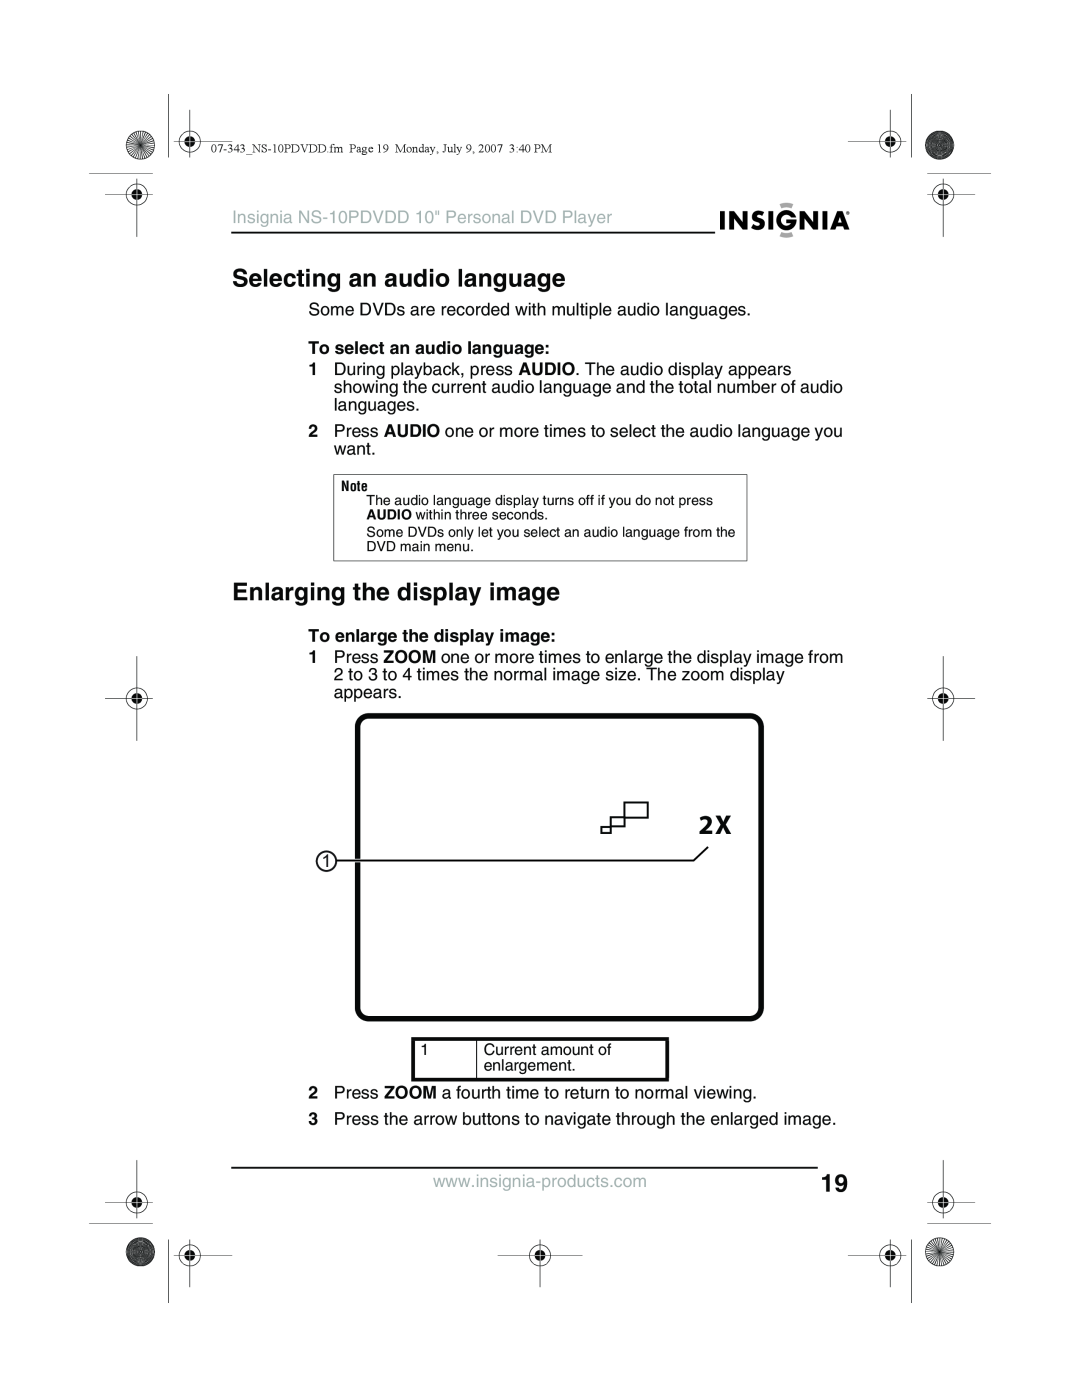 Insignia NS-10PDVDD manual Selecting an audio language, Enlarging the display image, To select an audio language 